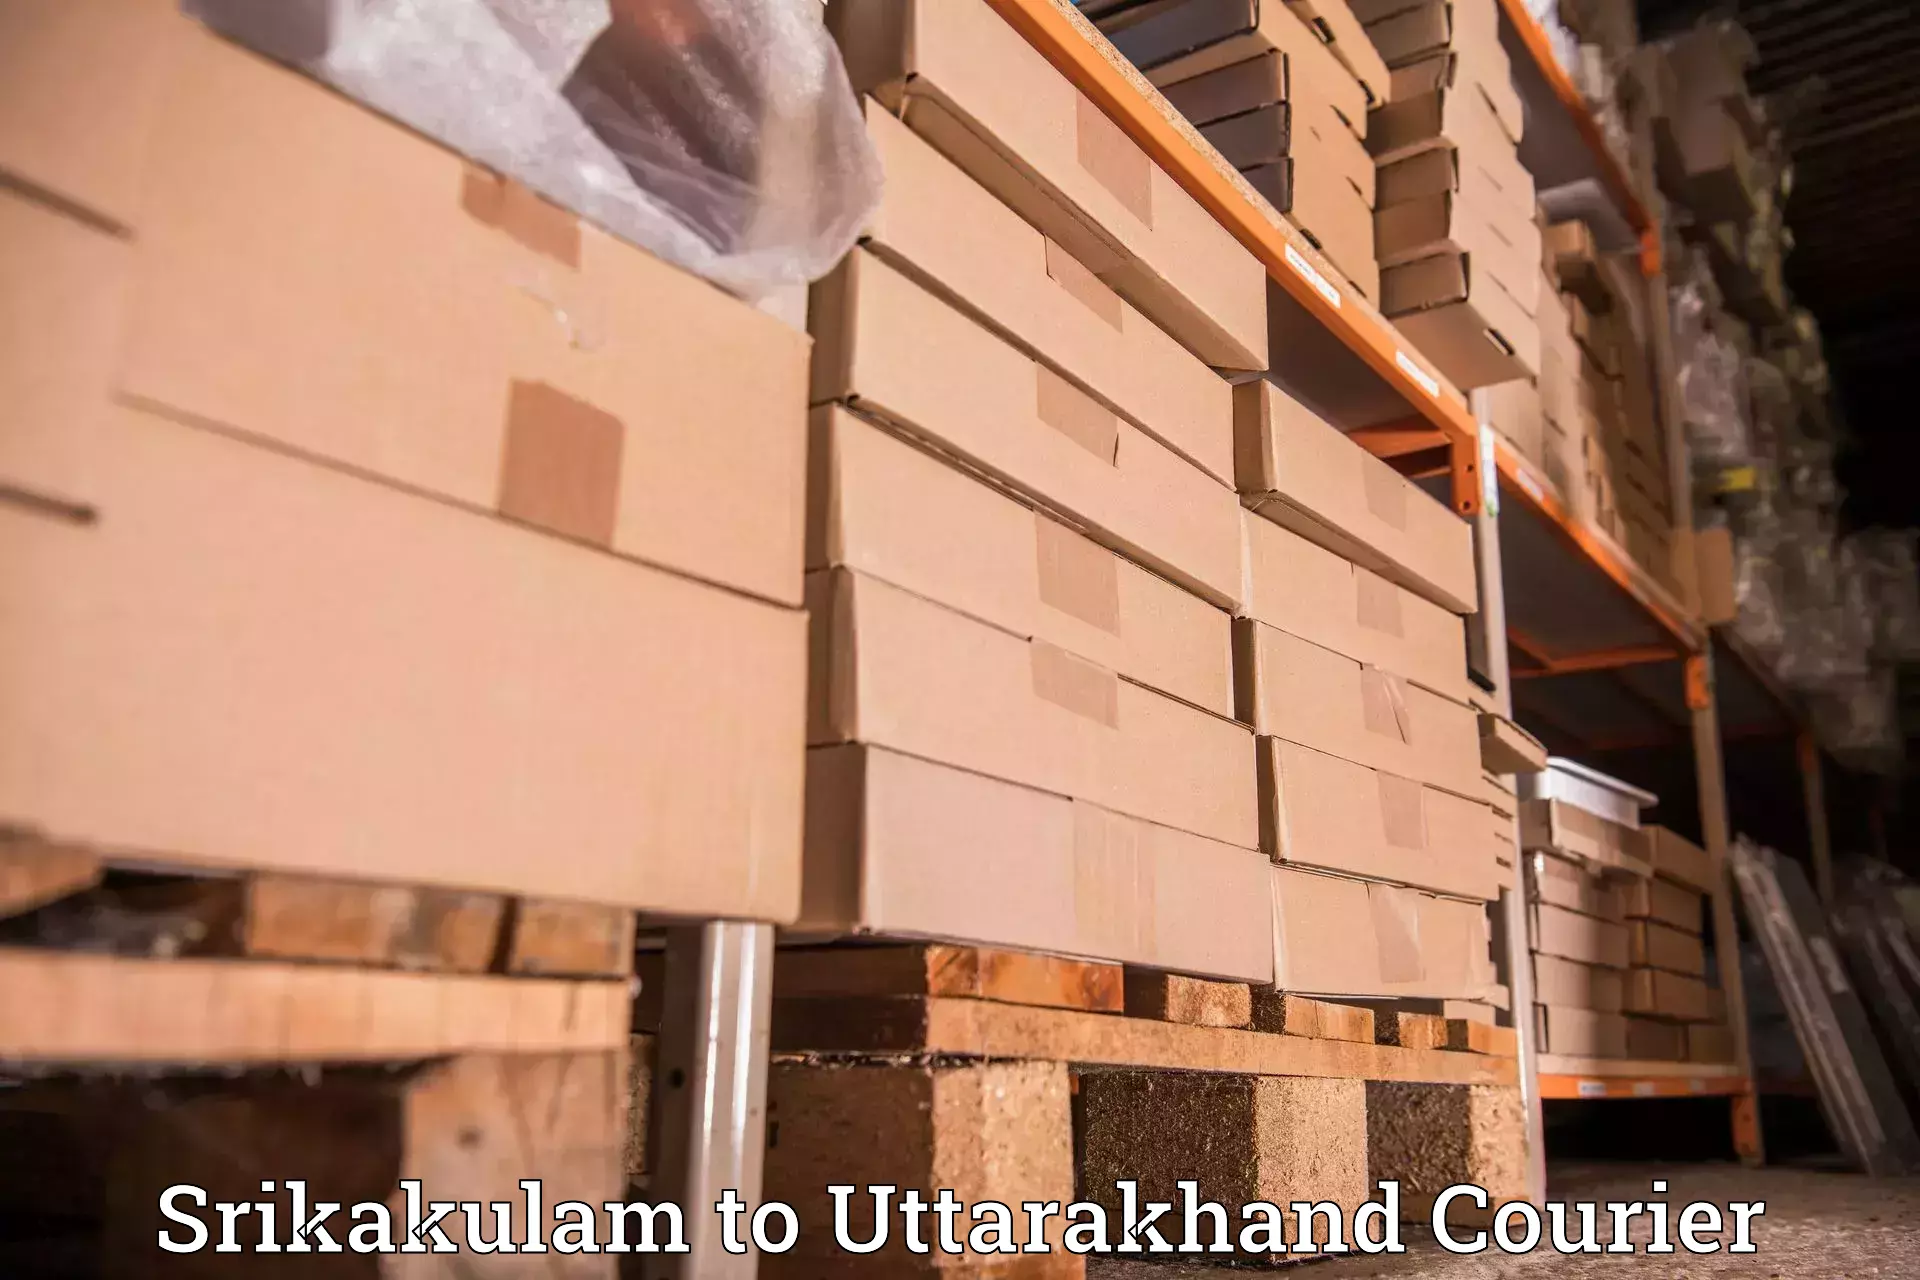 Courier service innovation Srikakulam to Haridwar